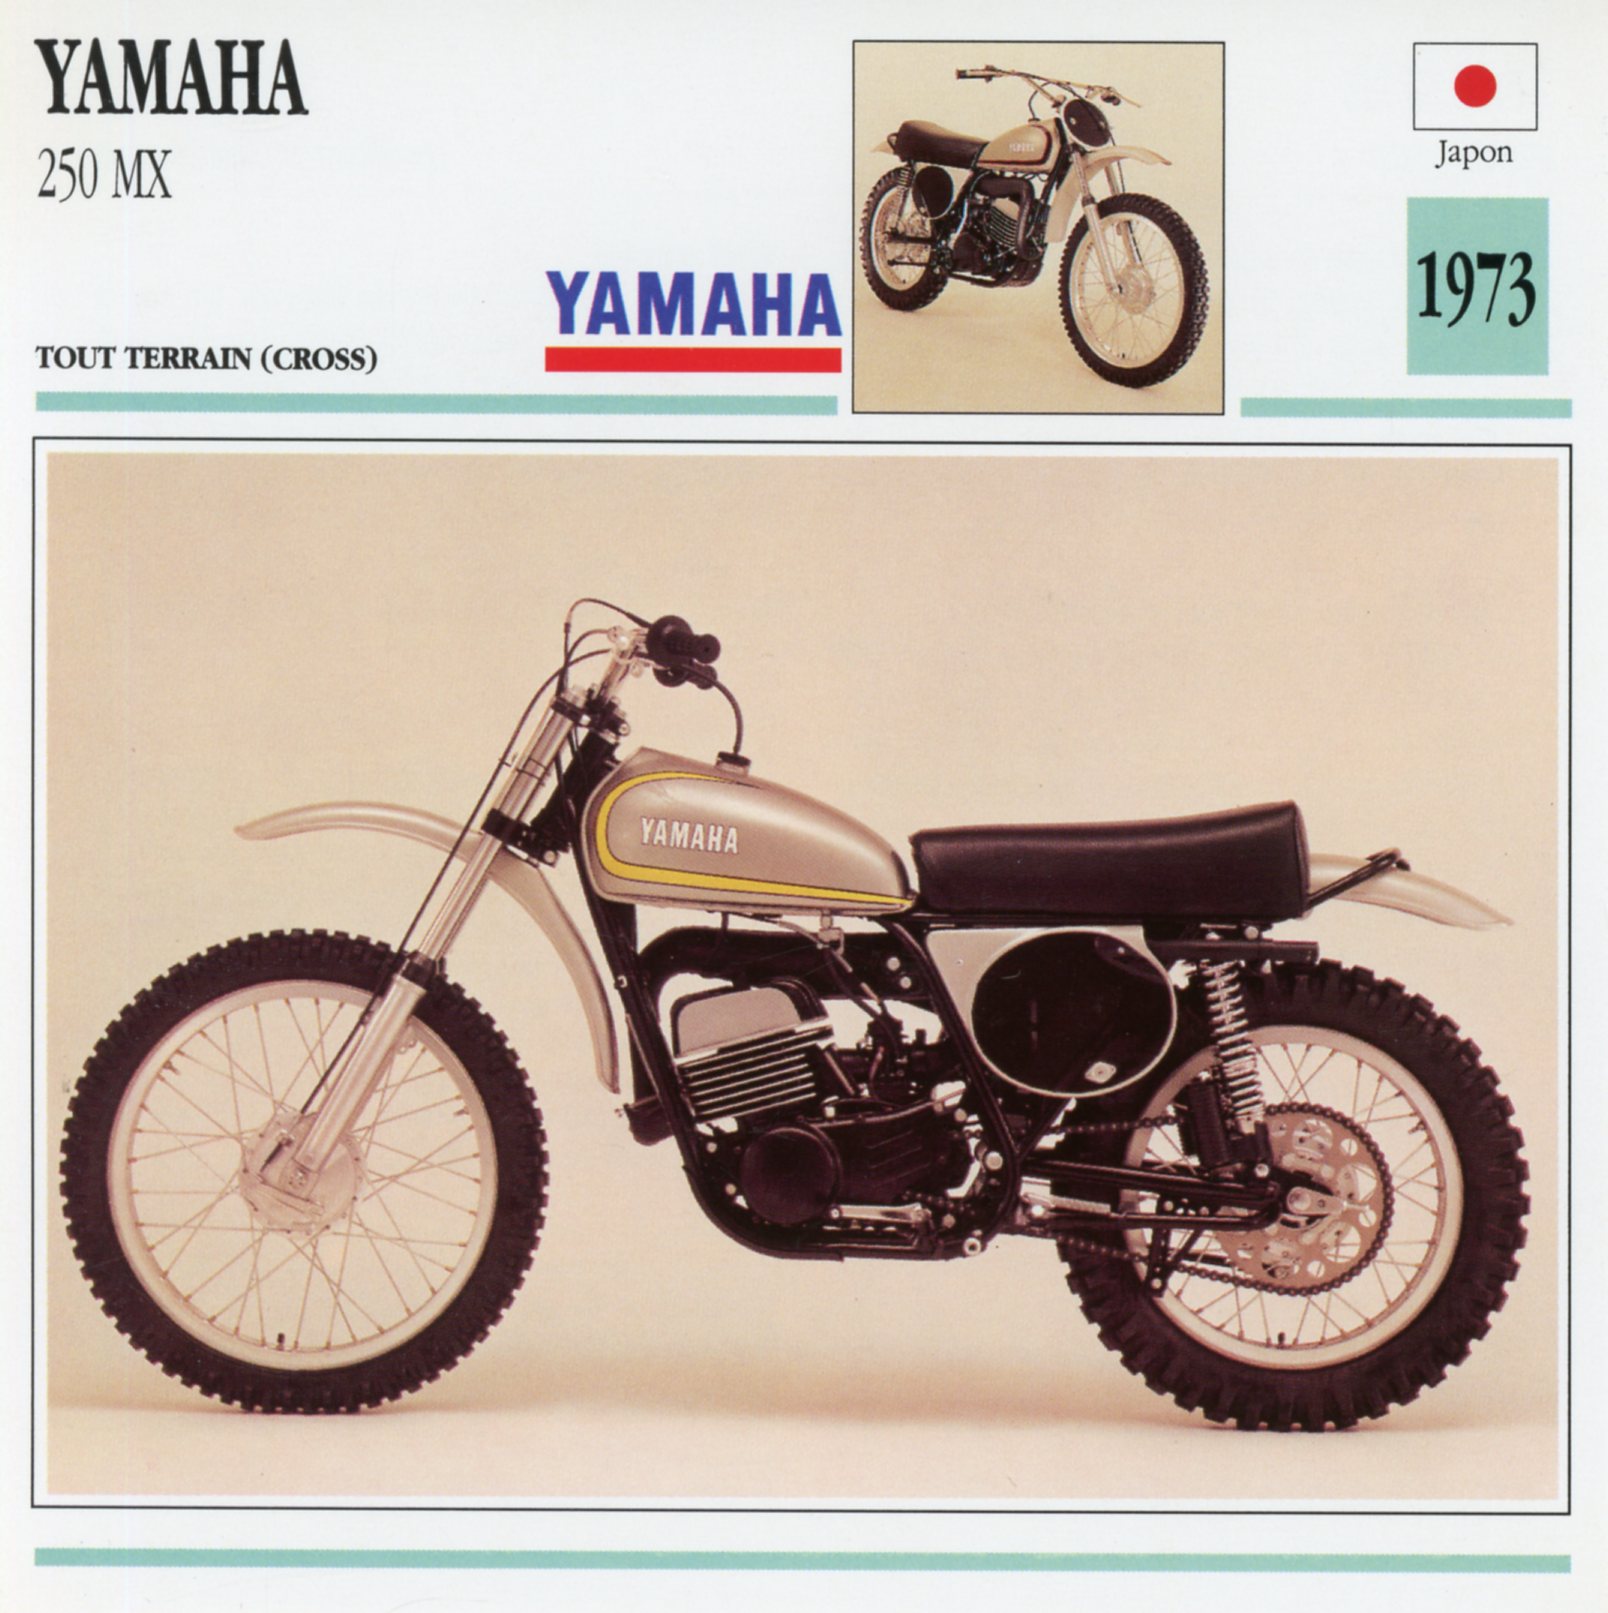 FICHE-MOTO-YAMAHA-MX-MX250-250-1973-LEMASTERBROCKERS-littérature-brochure